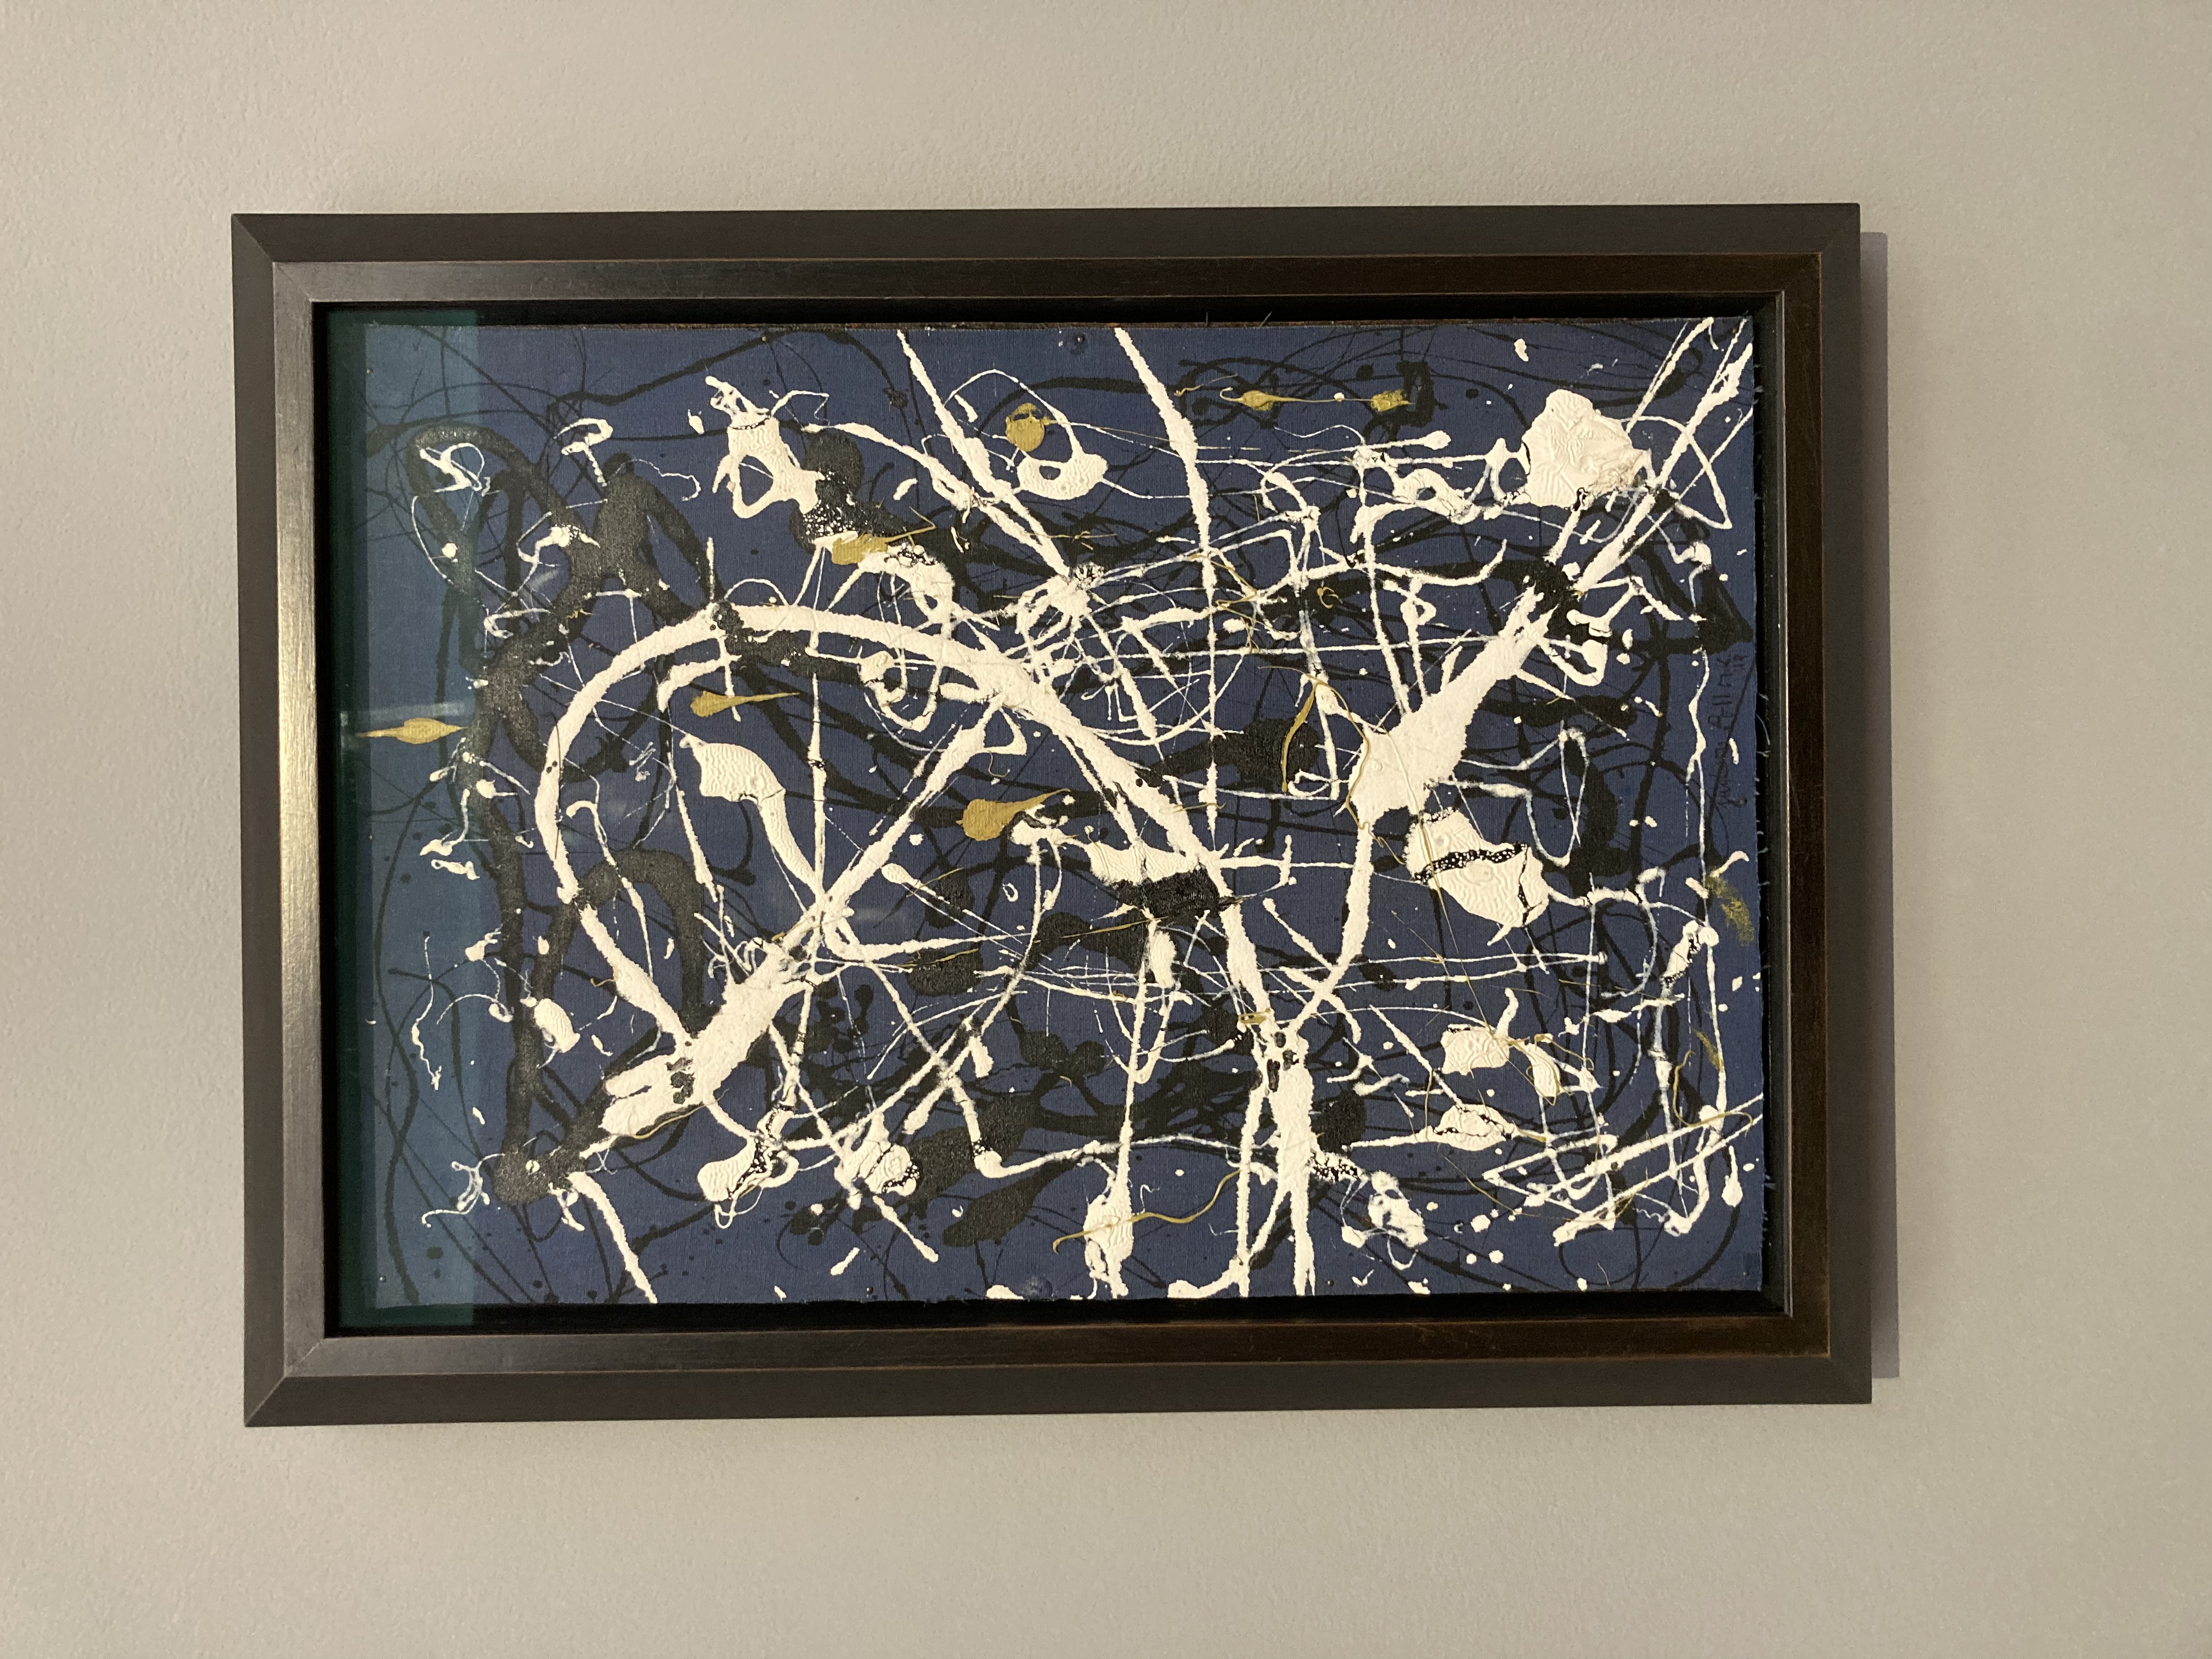 Jackson Pollock (1912-1956)
Komposition Nr. 16